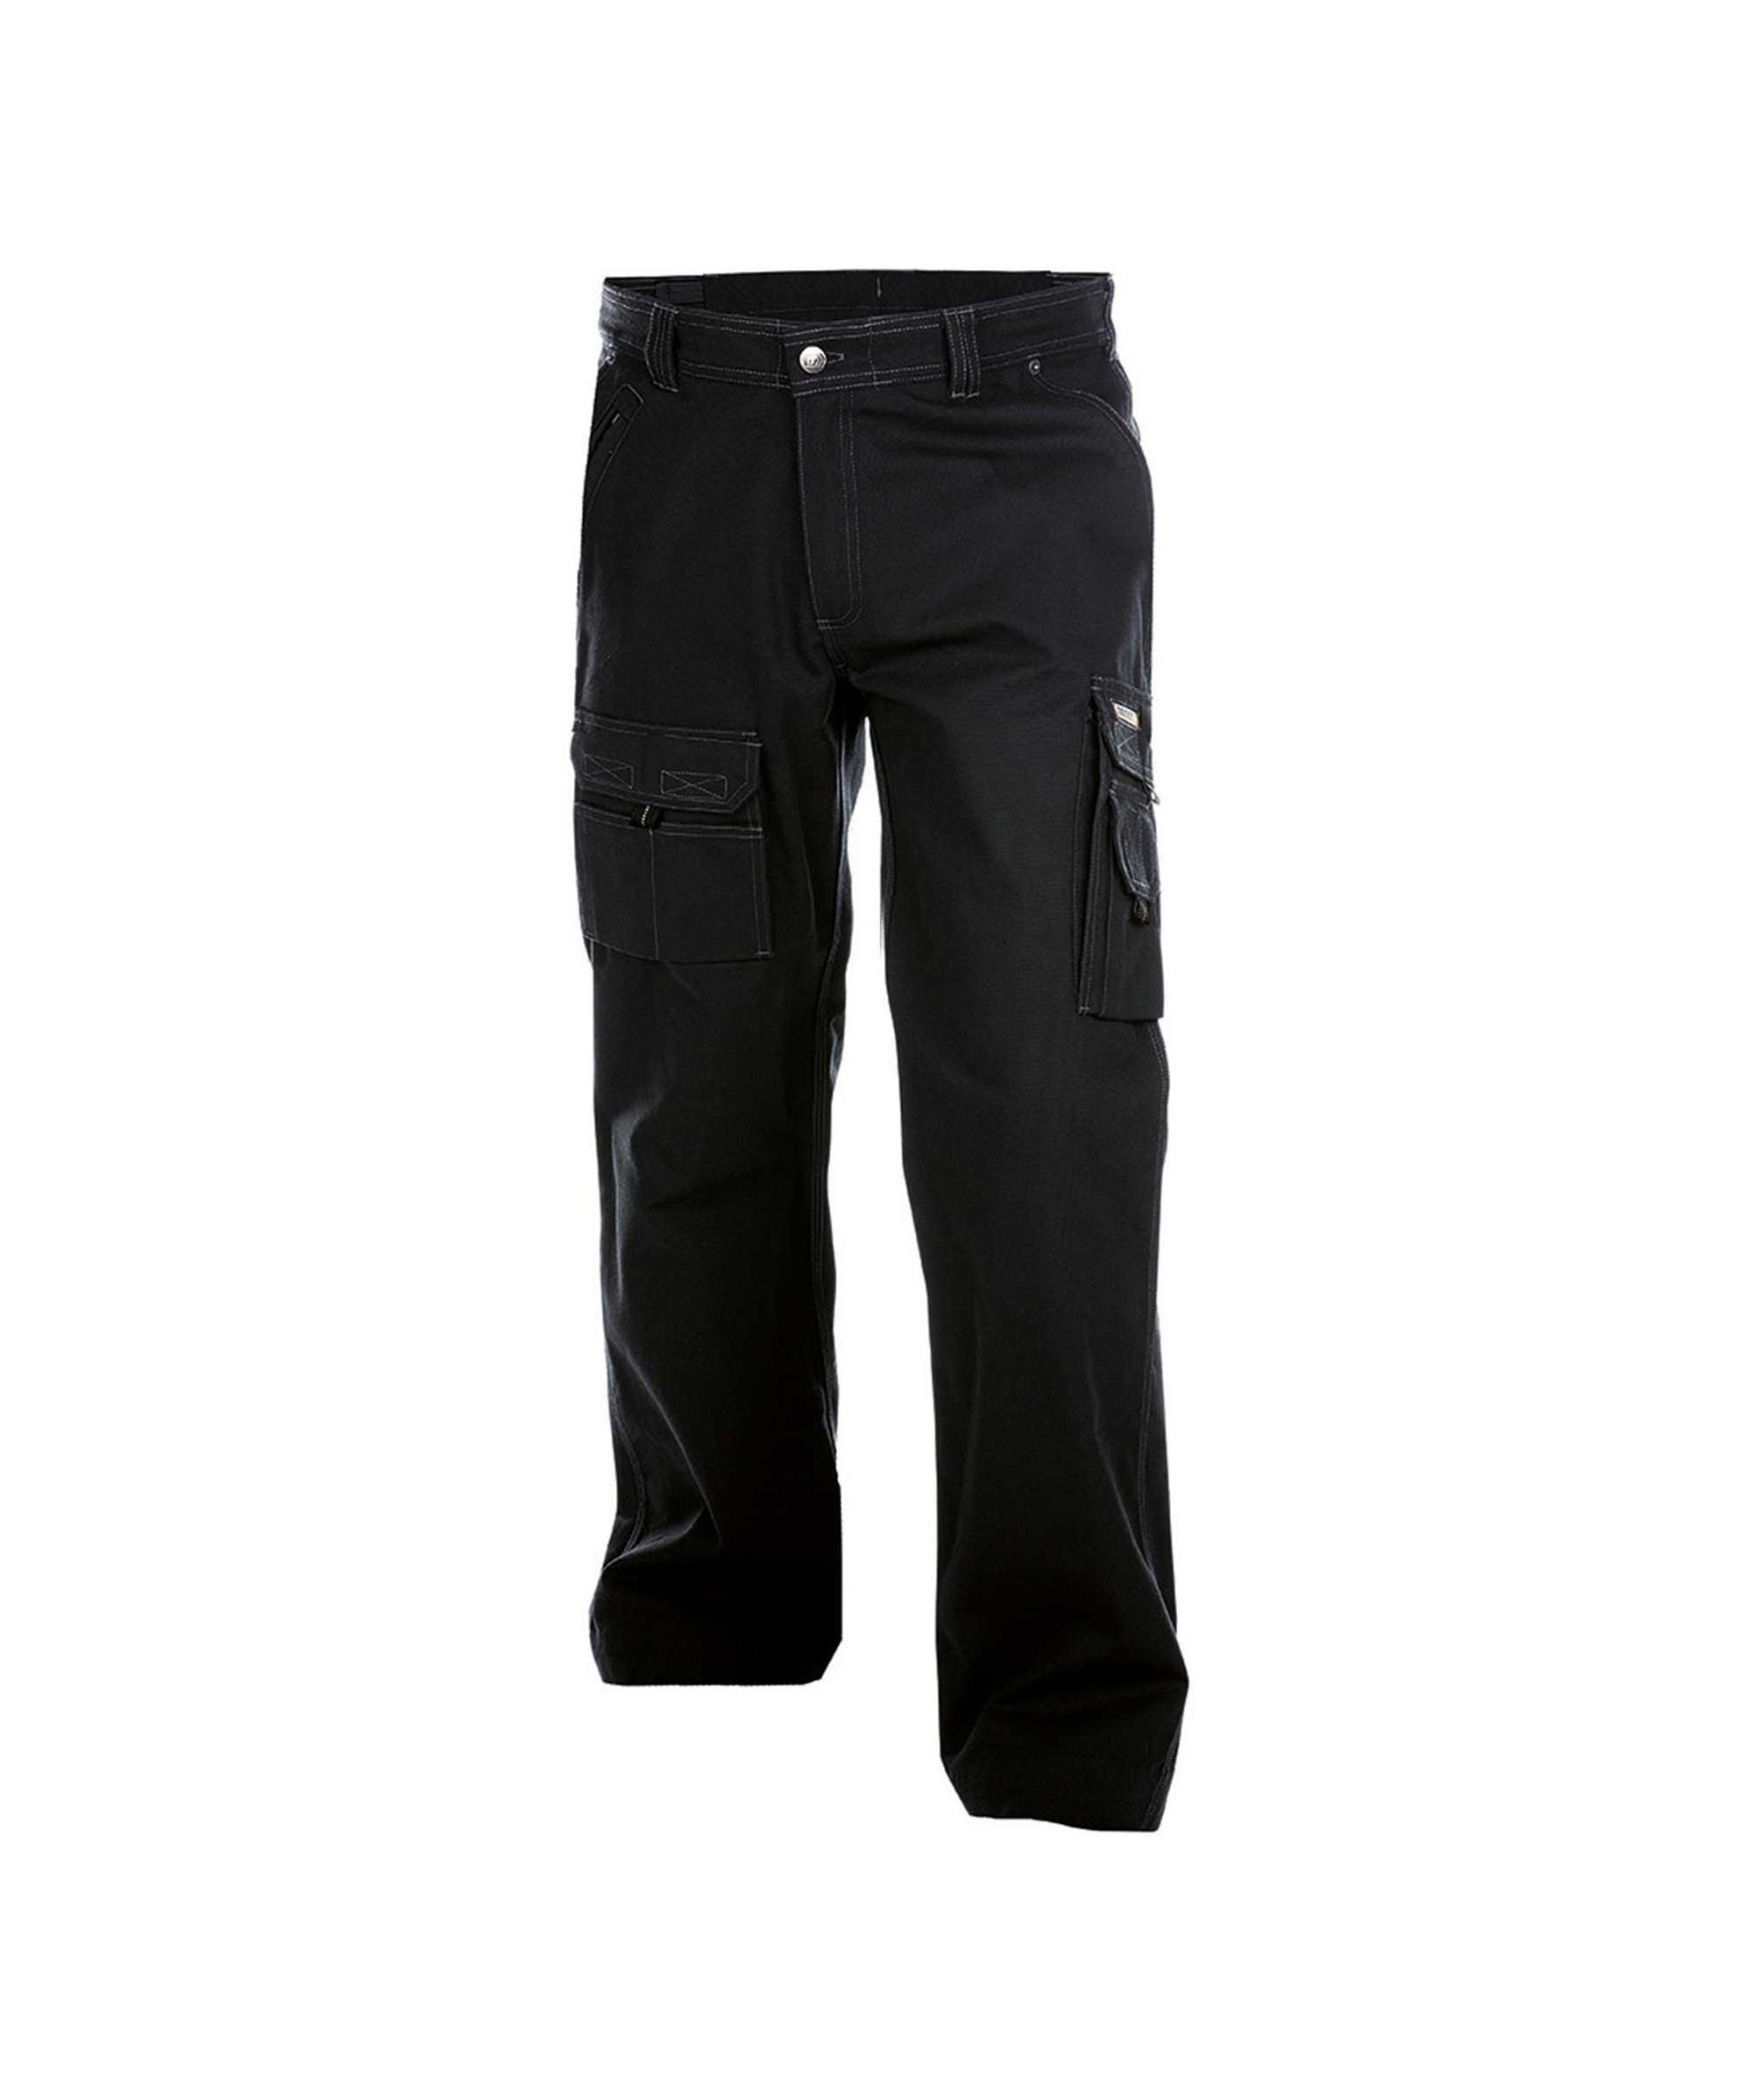 kingston_canvas-work-trousers_black_front.jpg